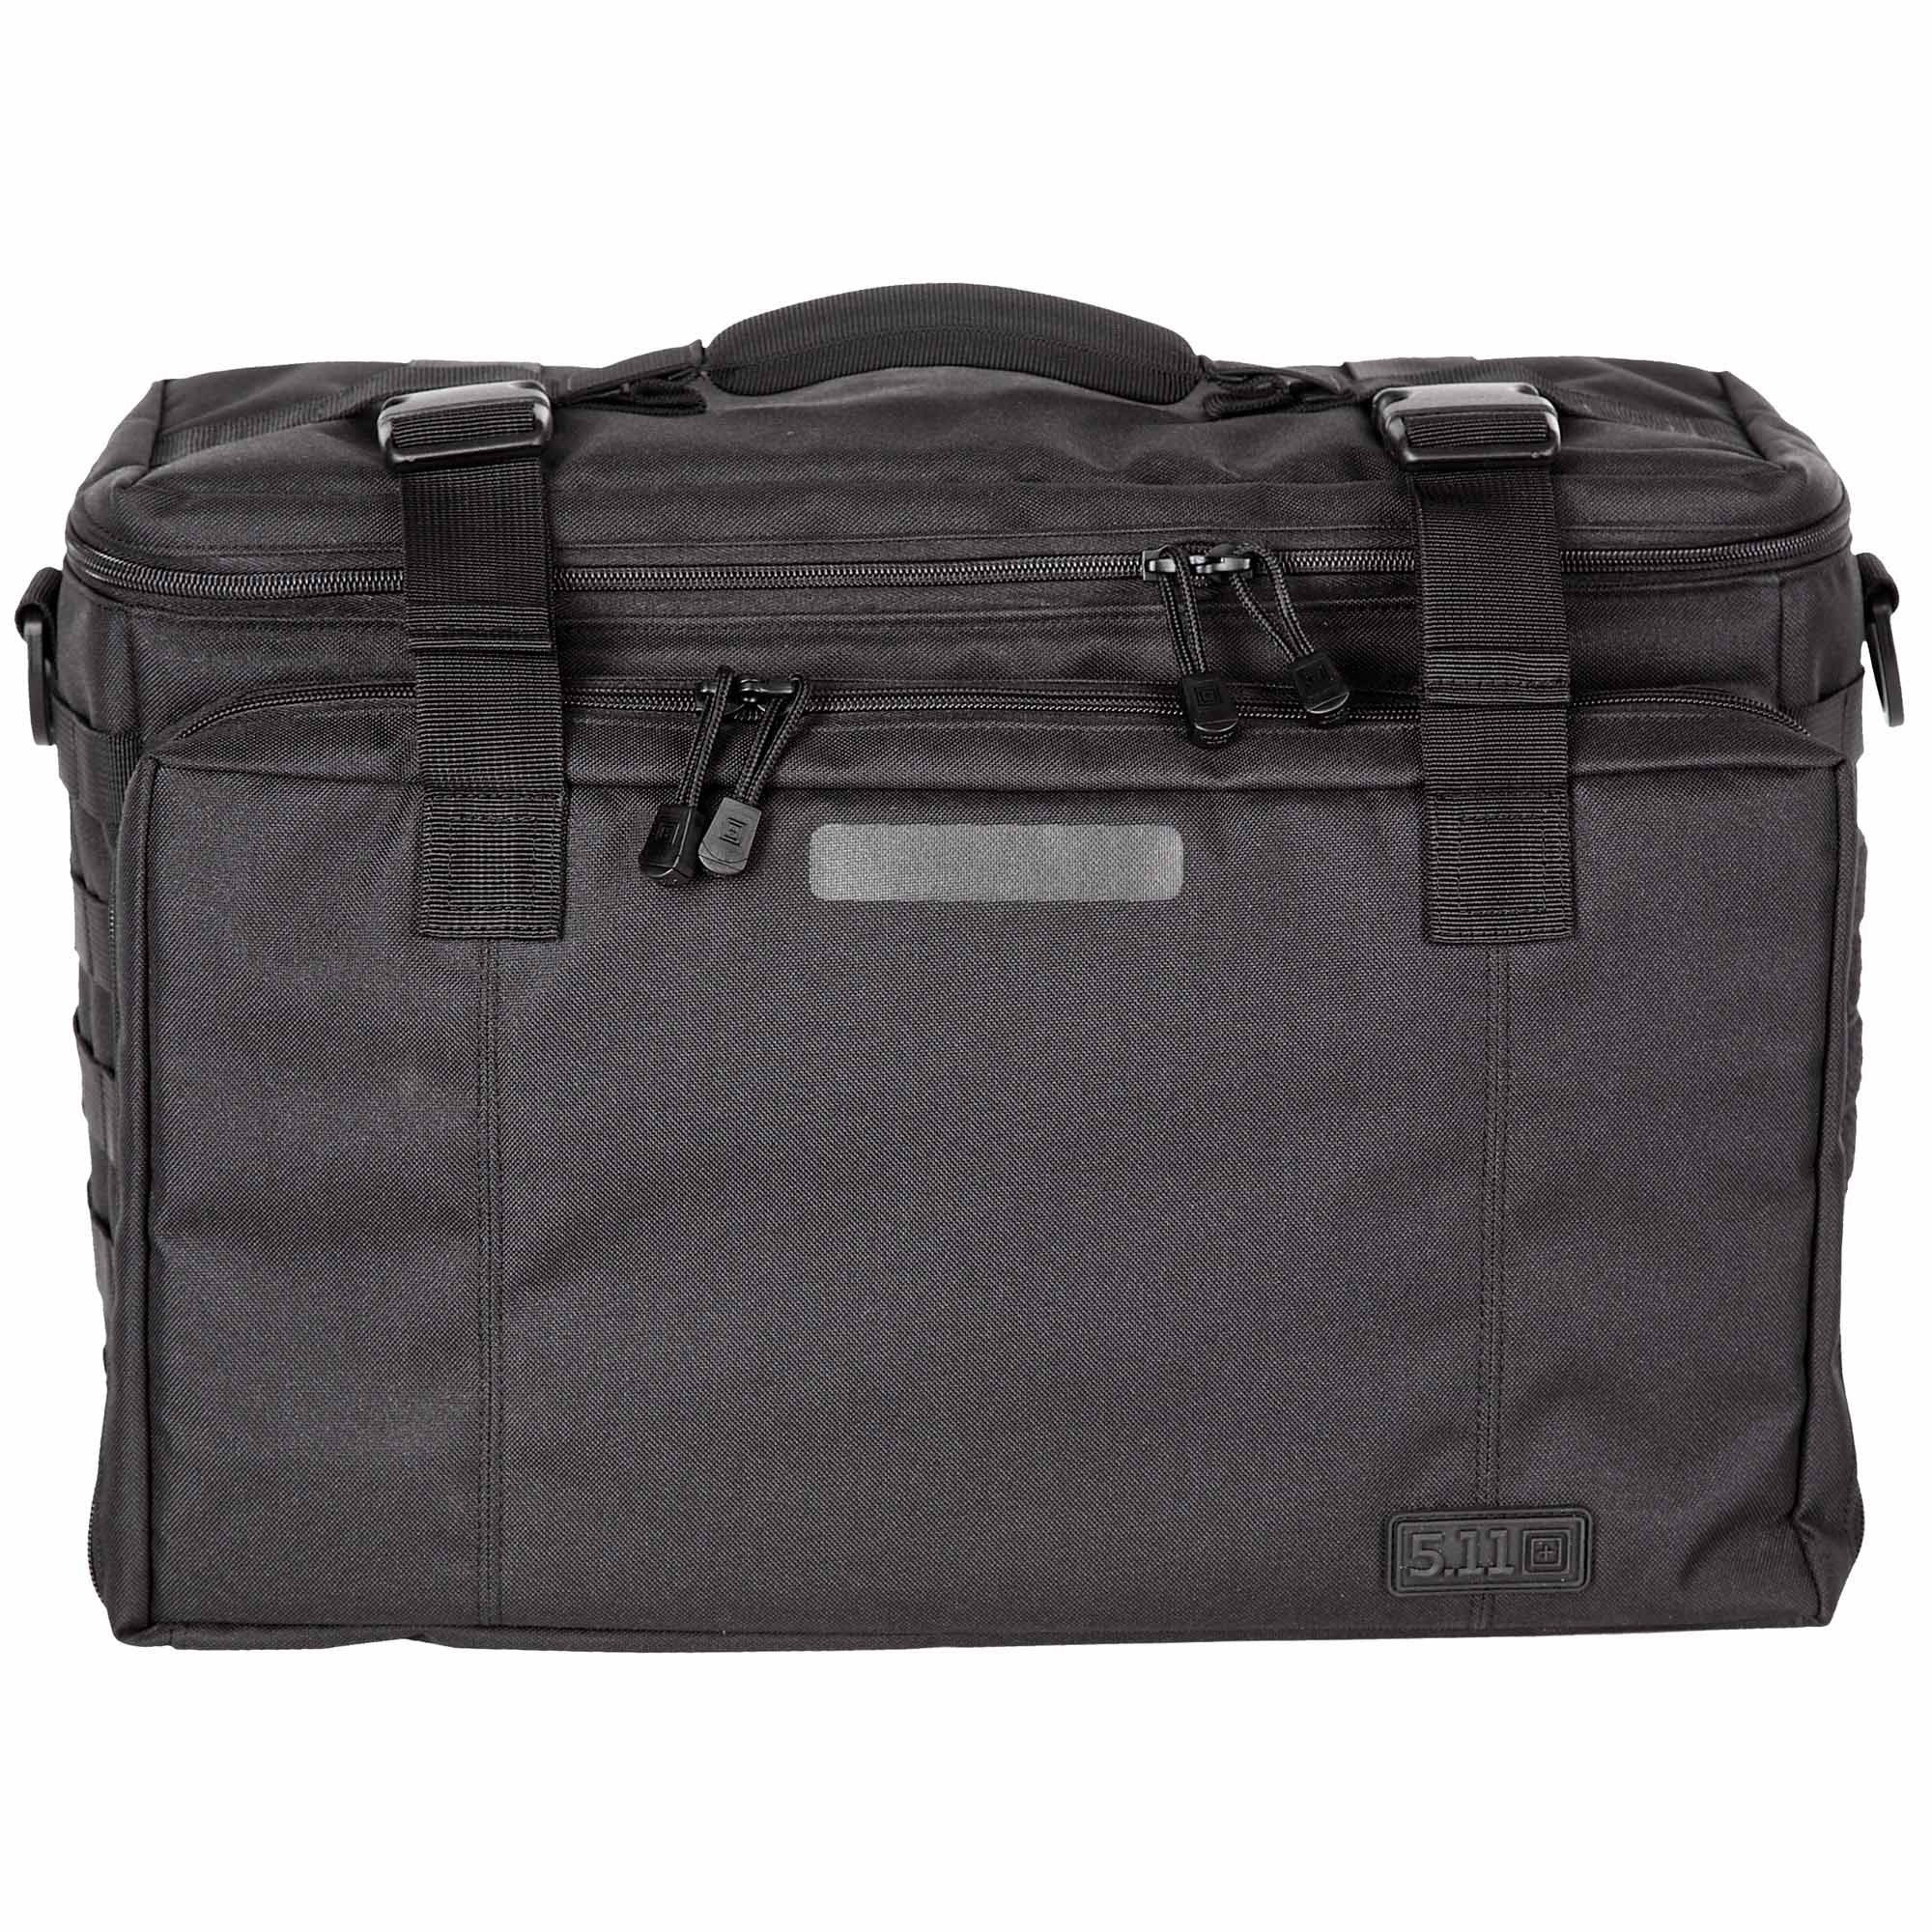 5.11 Wingman Patrol Bag Bags, Packs and Cases 5.11 Tactical Tactical Gear Supplier Tactical Distributors Australia